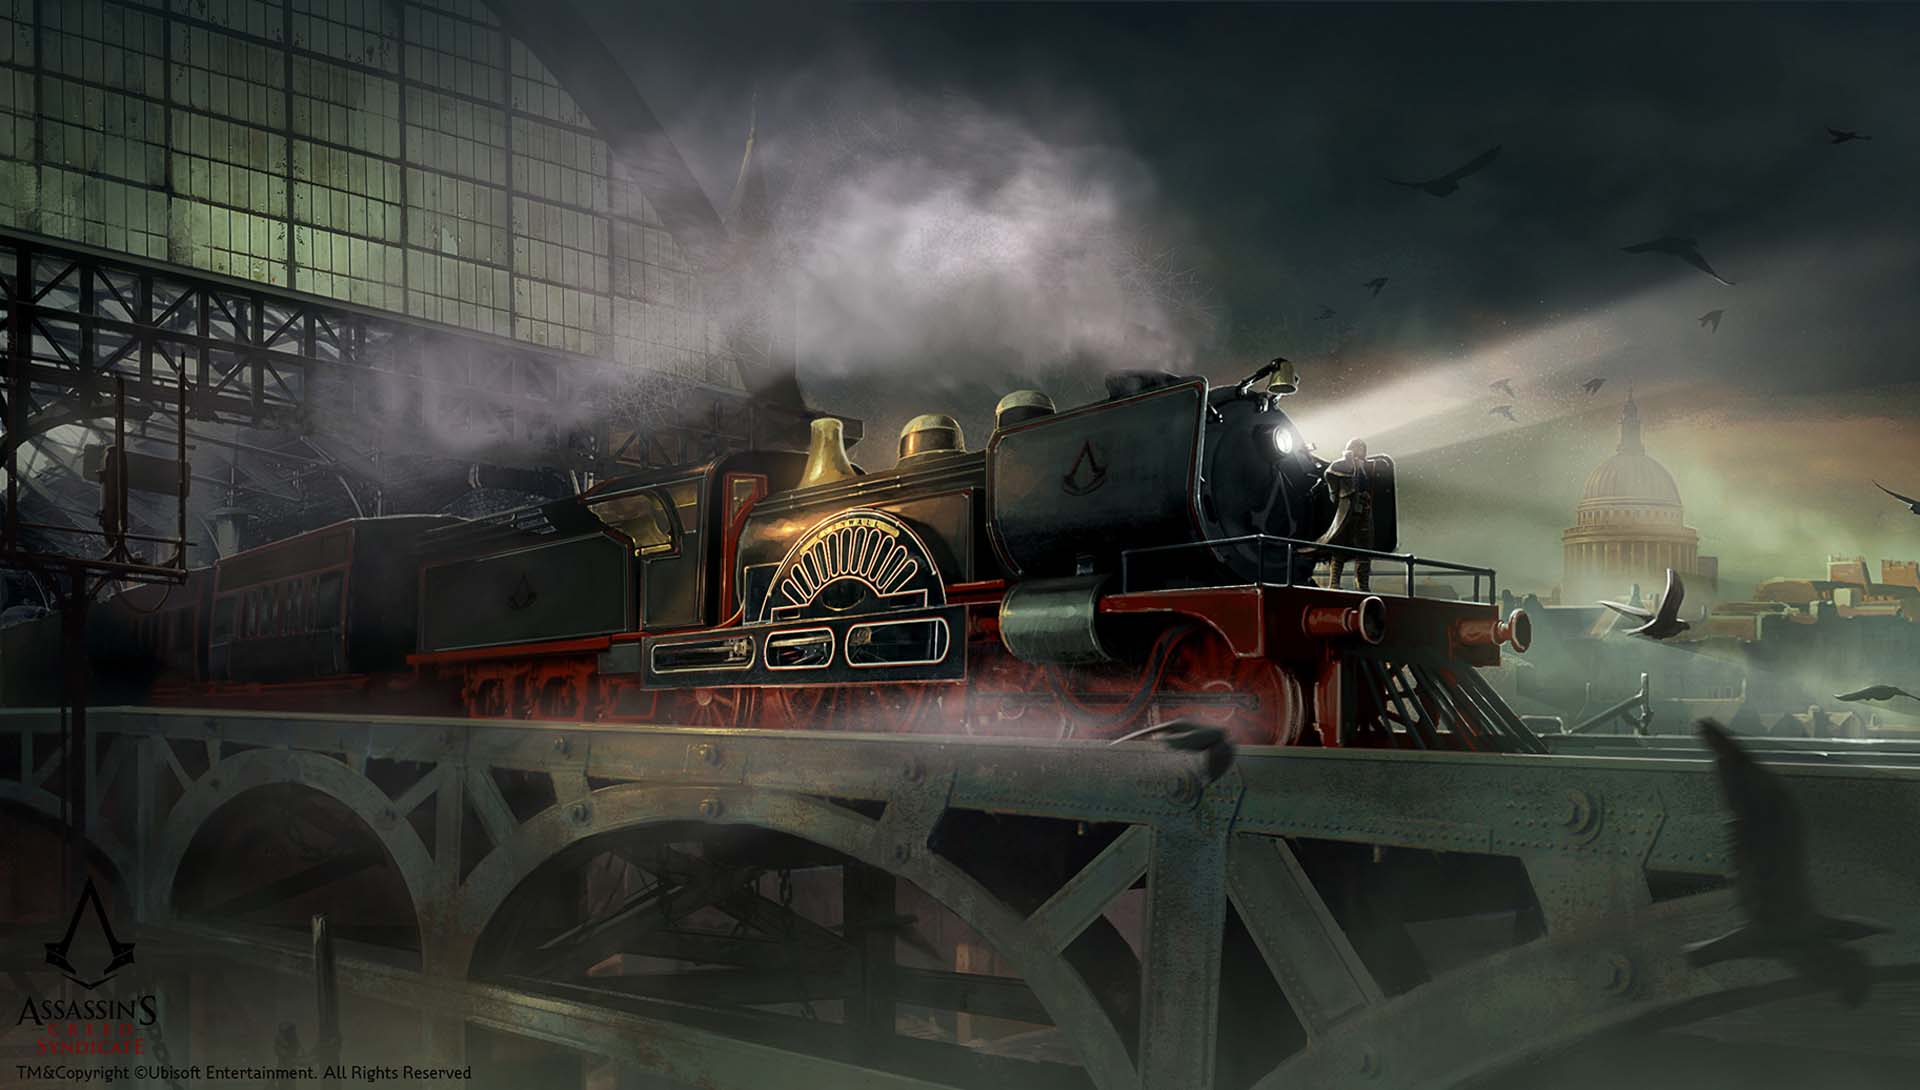 Locomotive d'Assassin's Creed Syndicate - Ubisoft Entertainment